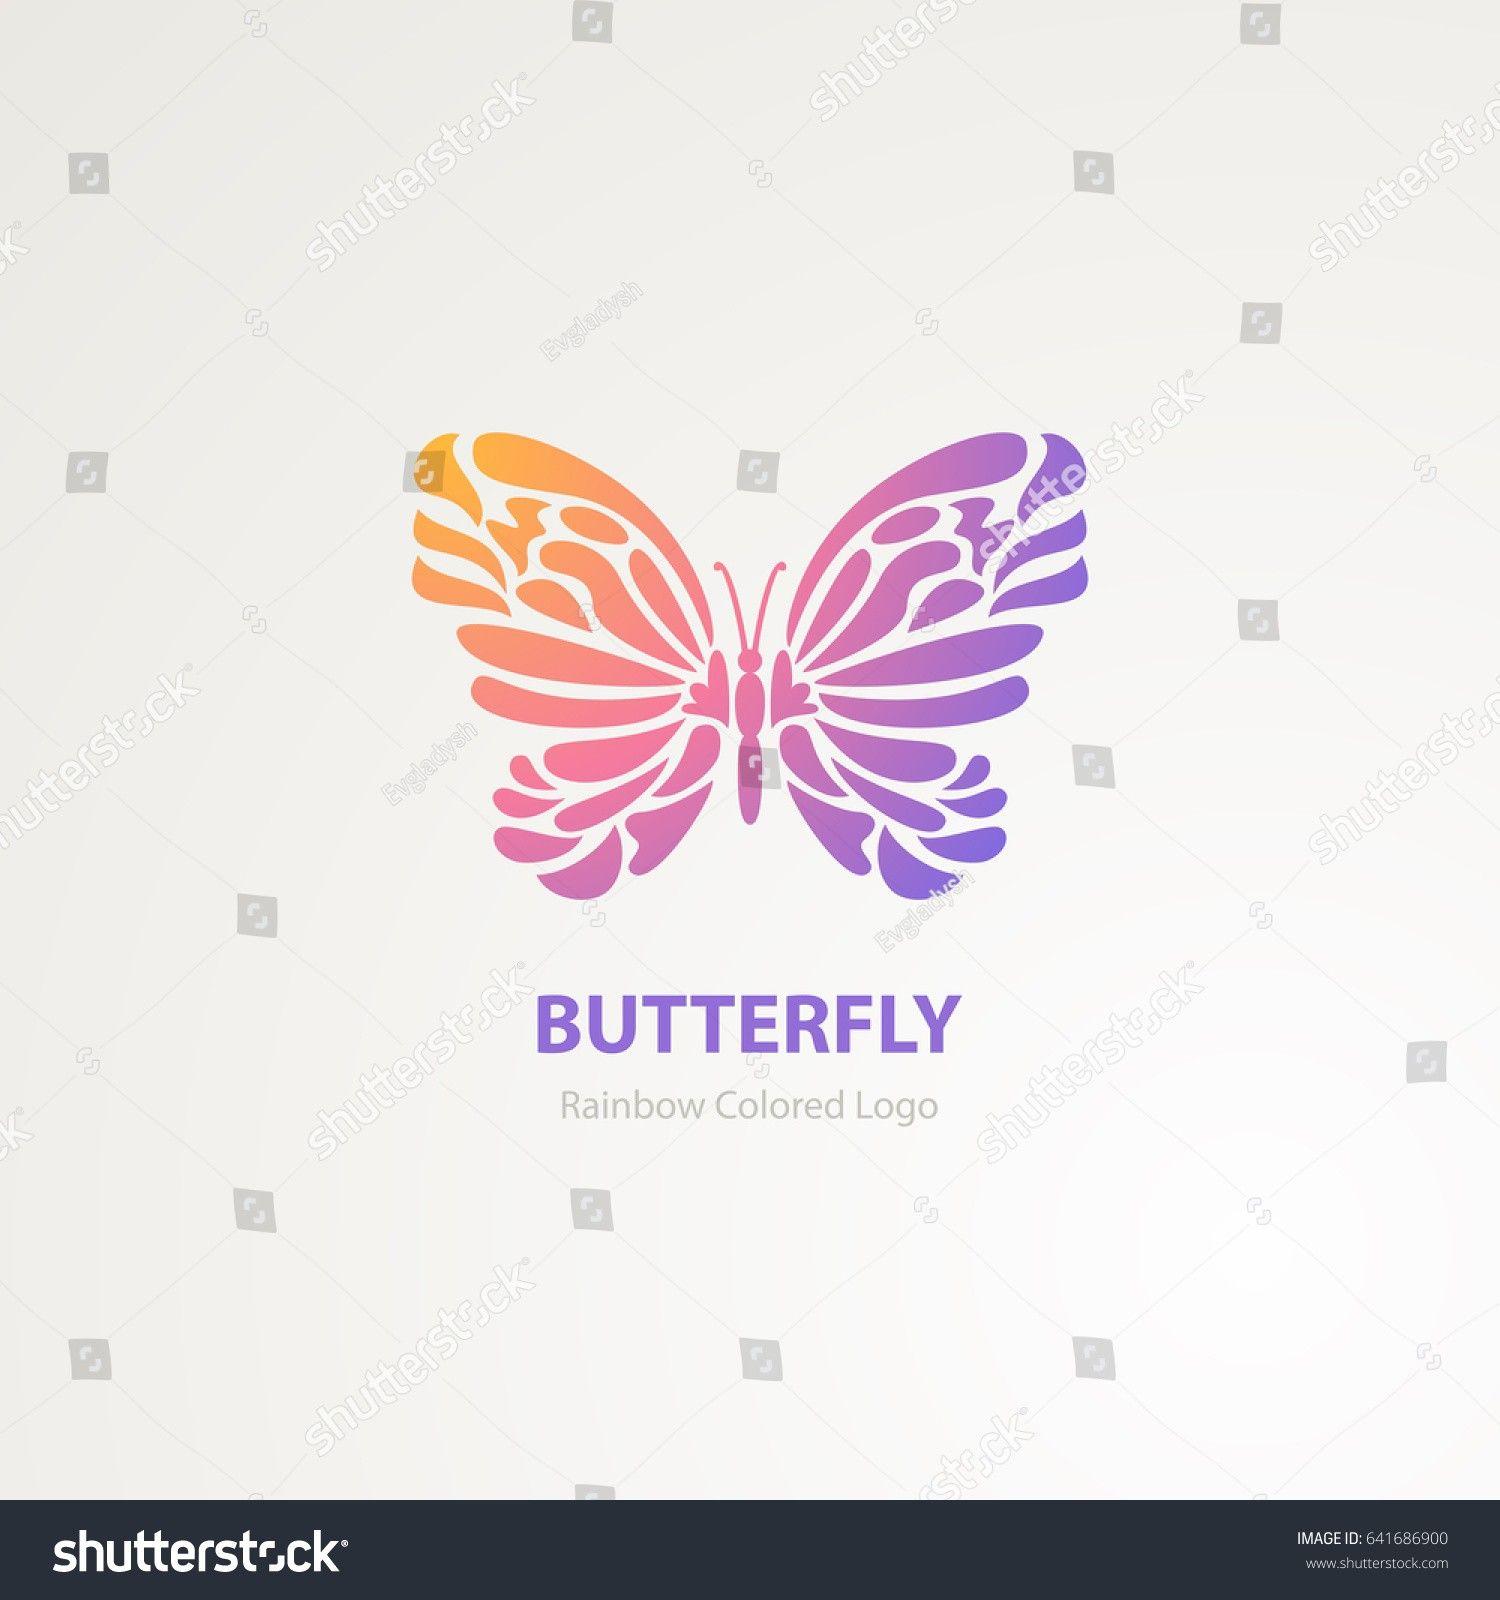 Microsoft Butterfly Logo - Microsoft Butterfly Logo Quiz - Best Image Of Butterfly Imagevet.Co